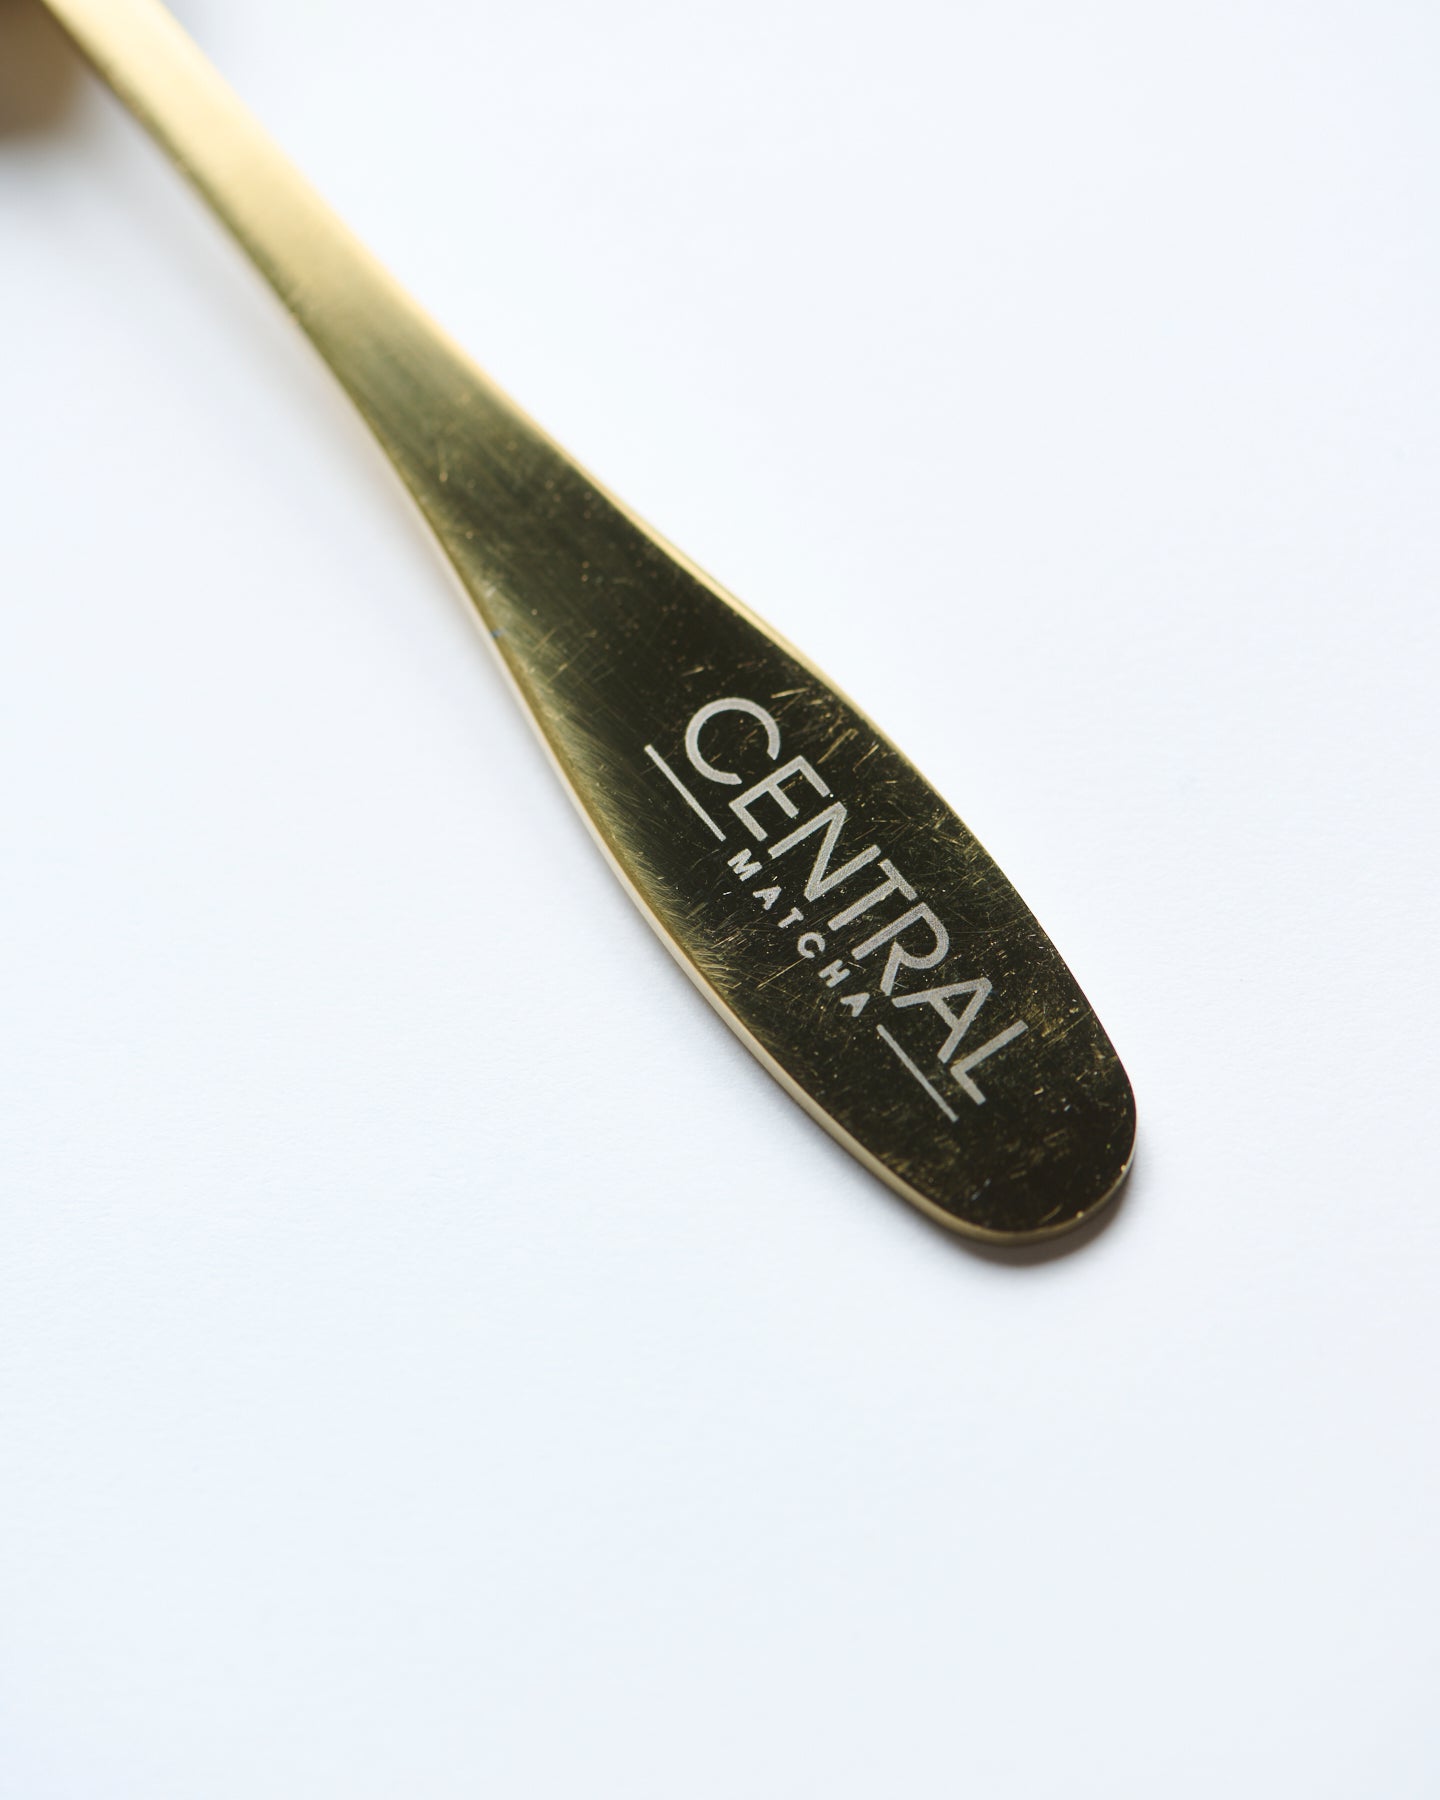 Matcha Measuring Spoon (2 grams)